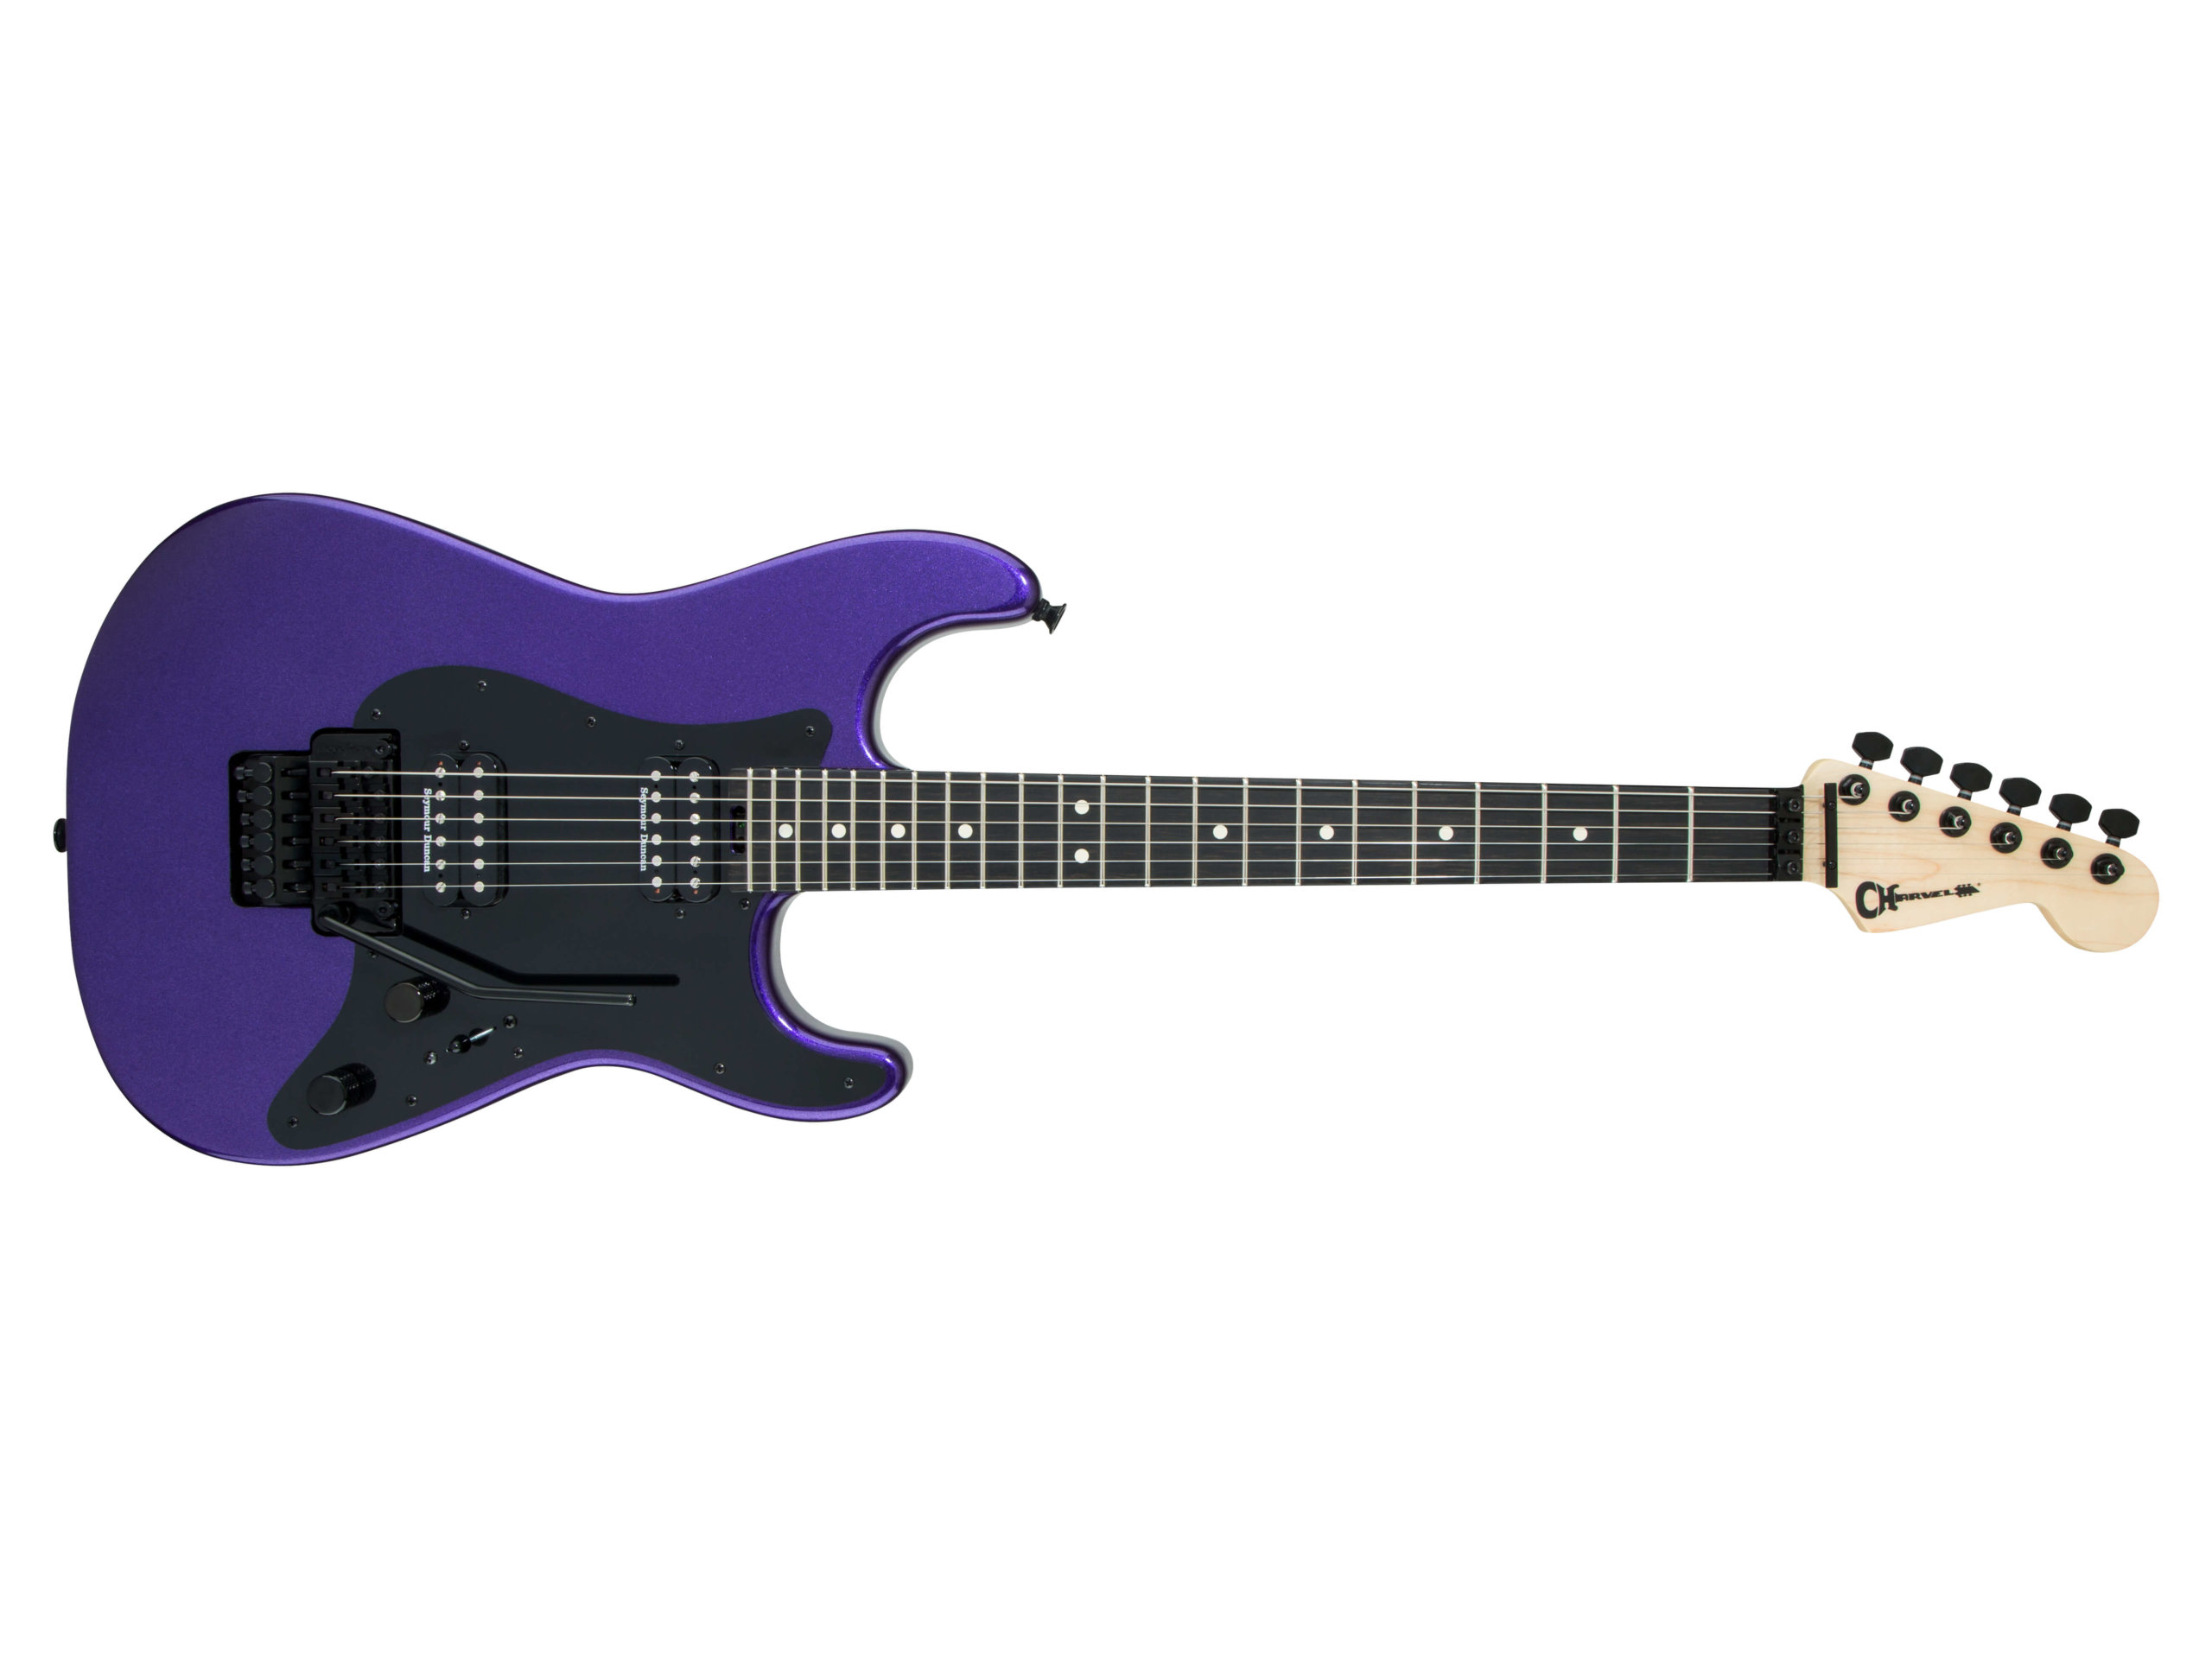 The So-Cal Style 1 HH FR E in Deep Purple Metallic